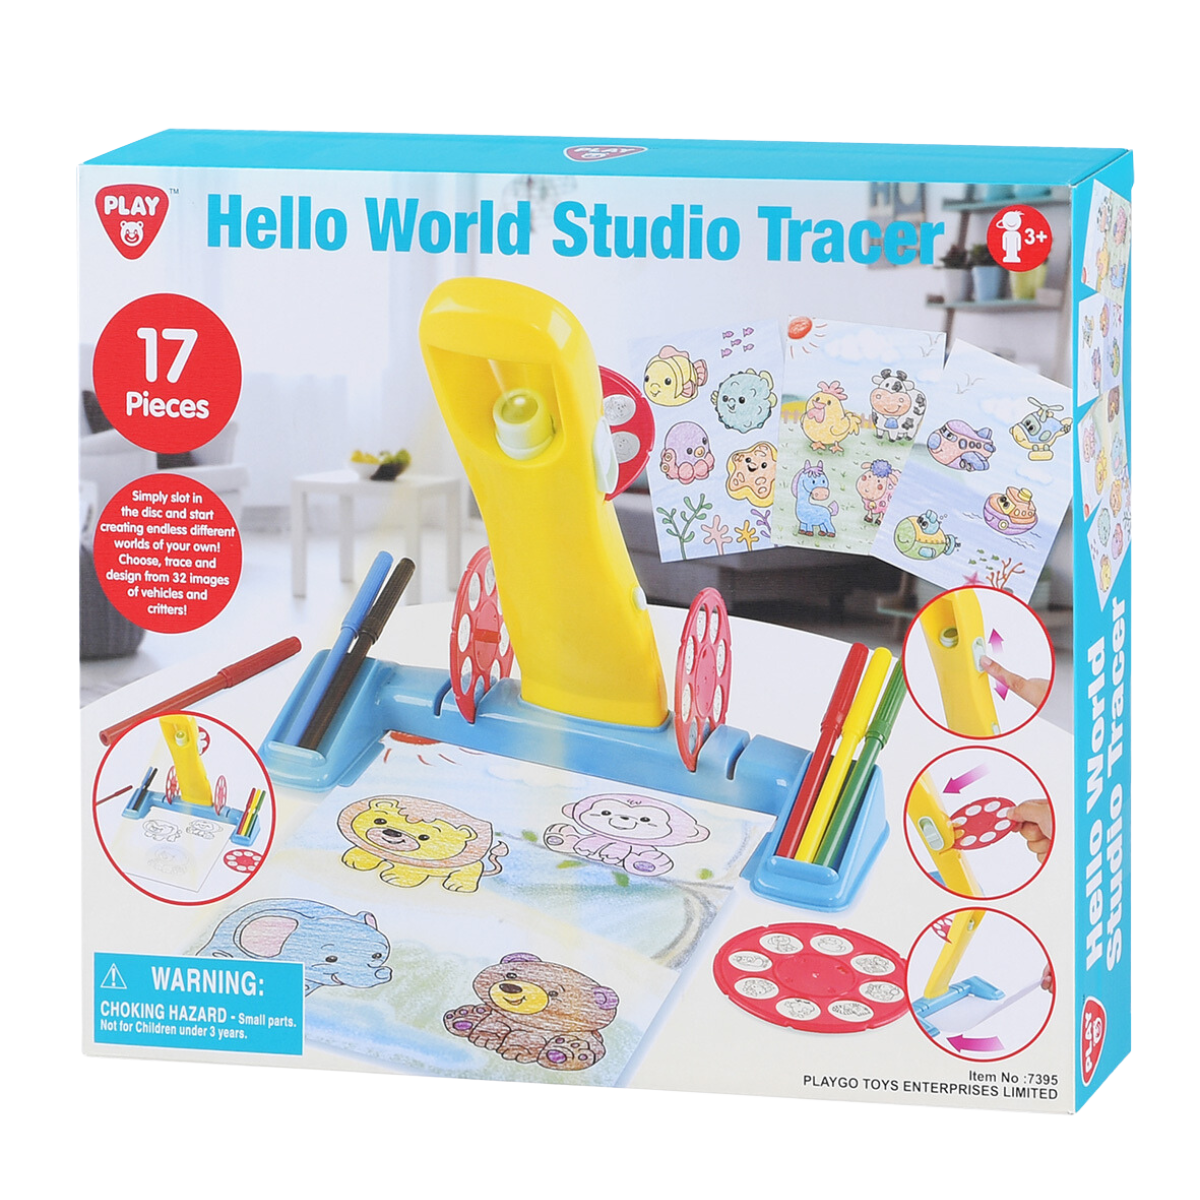 Hello World Studio Tracer